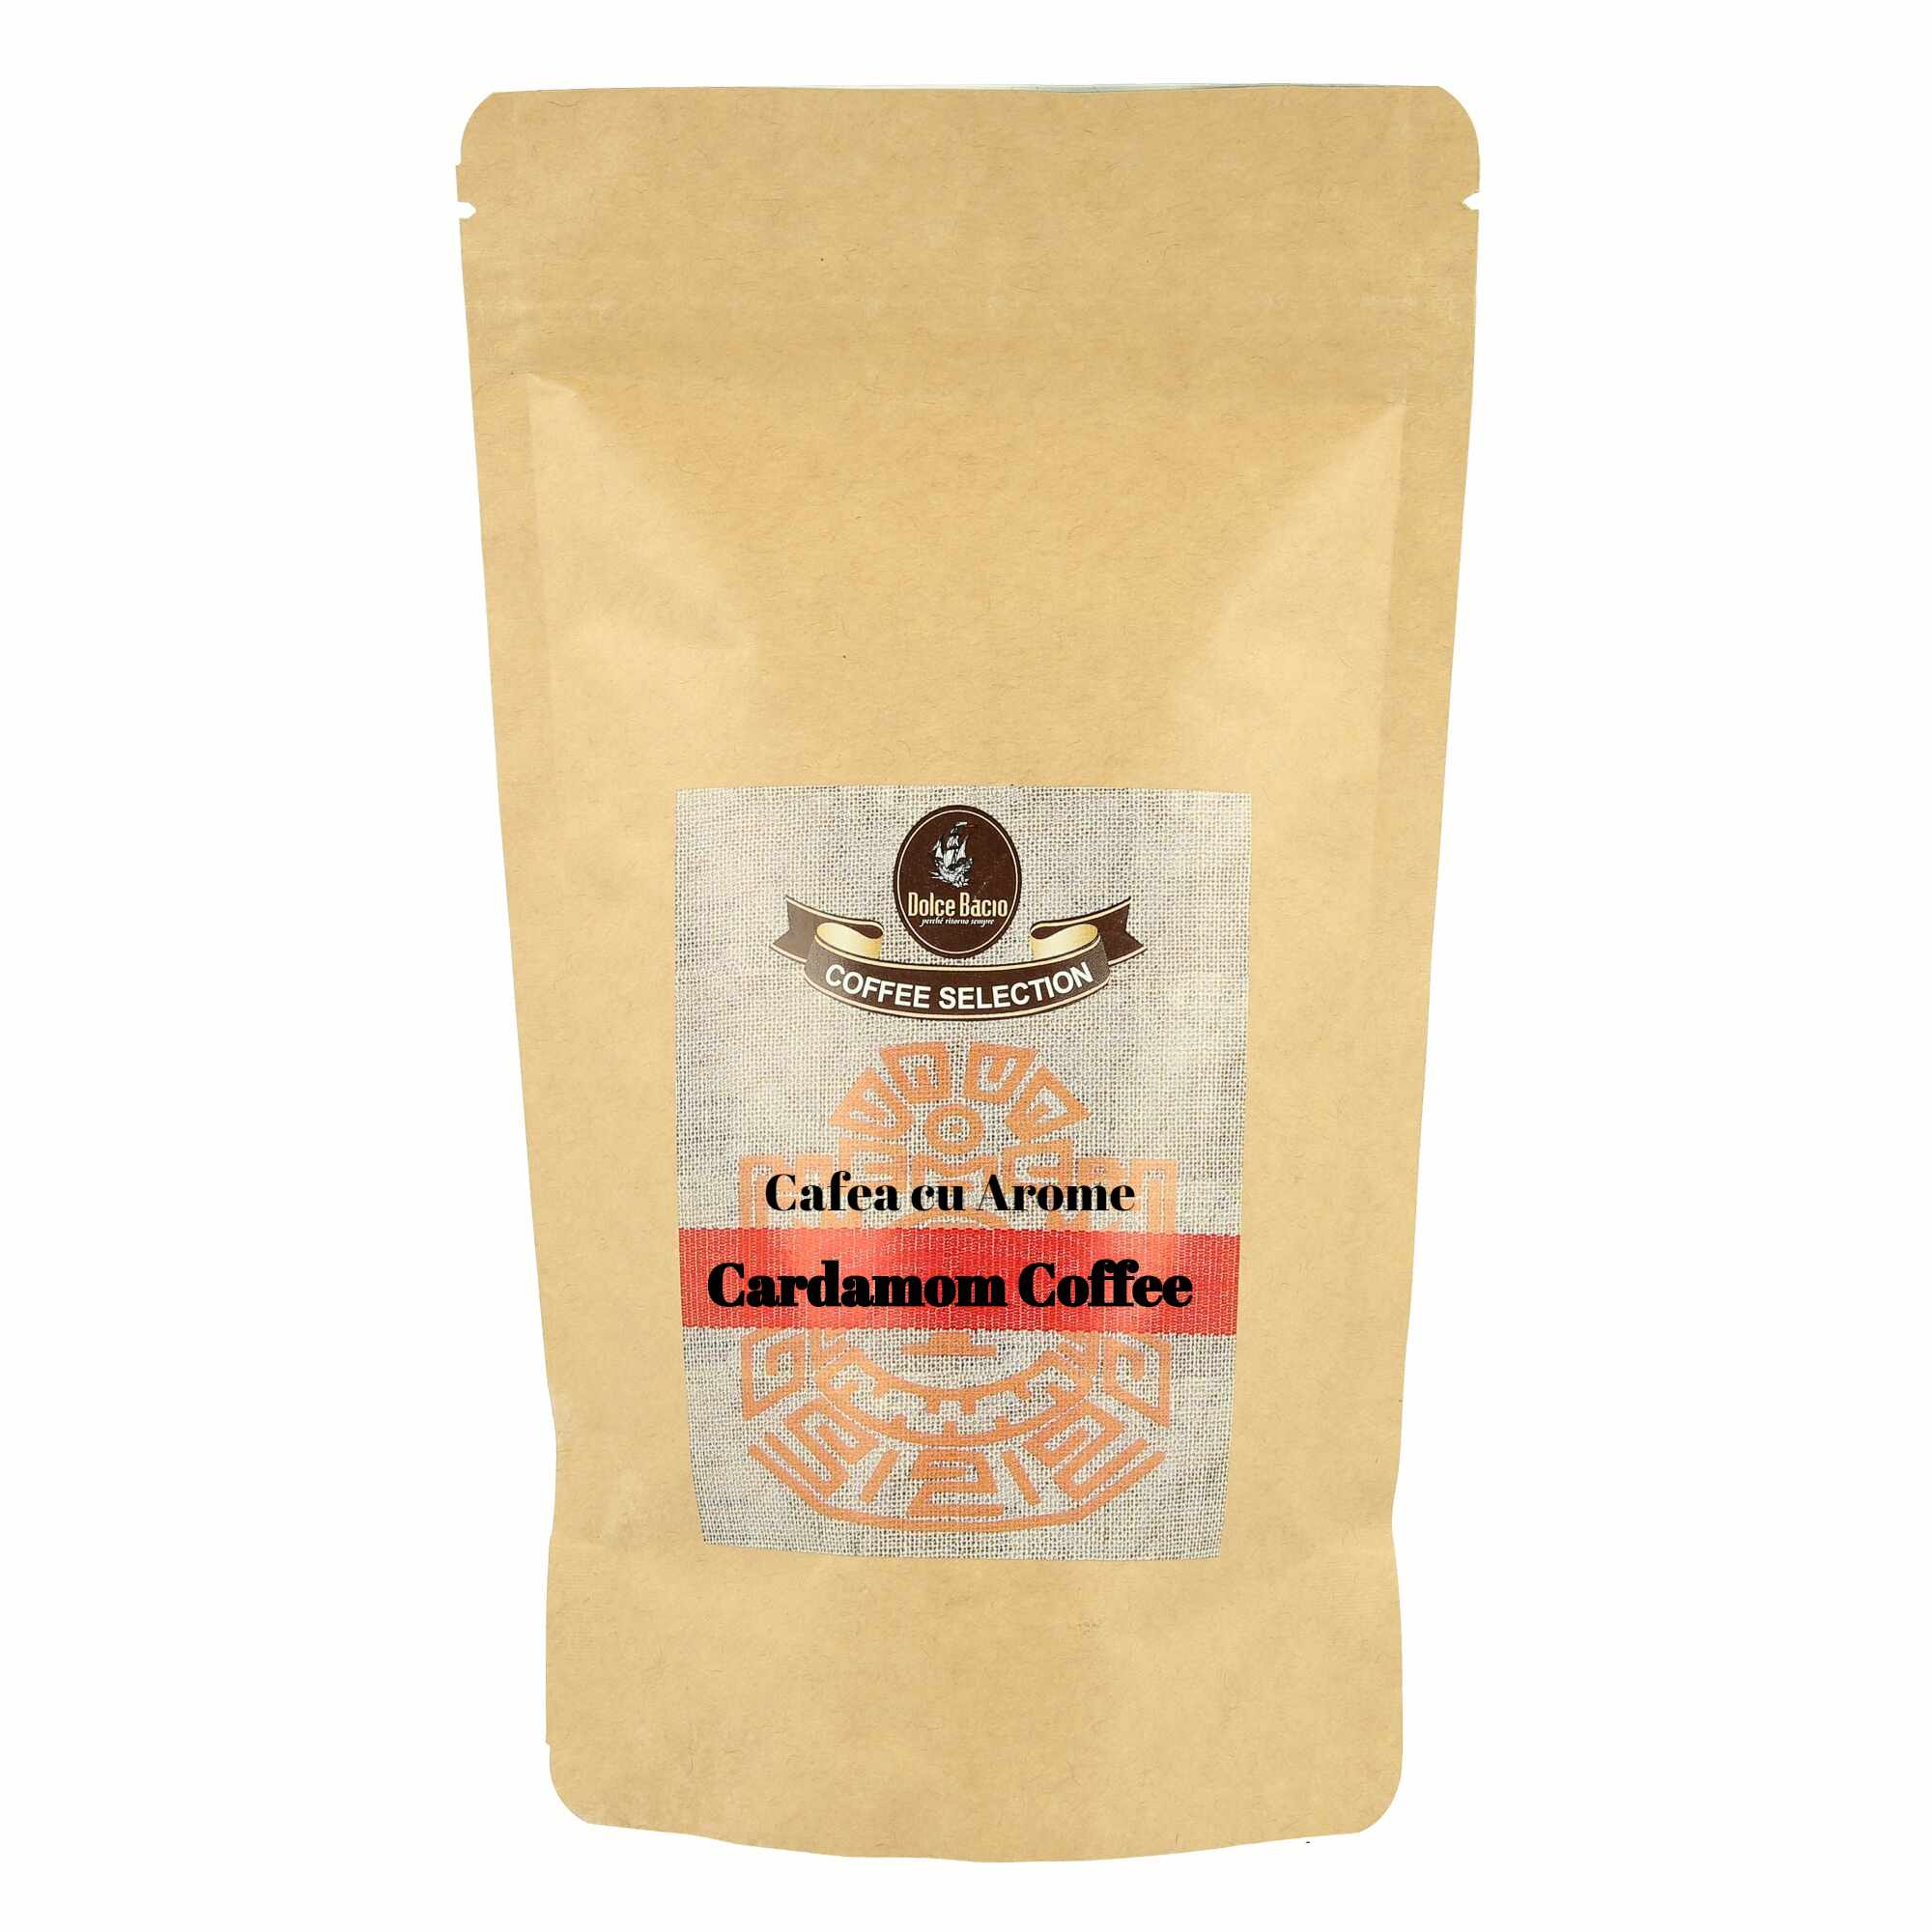 Cardamom Coffee 400g cafetiera moka